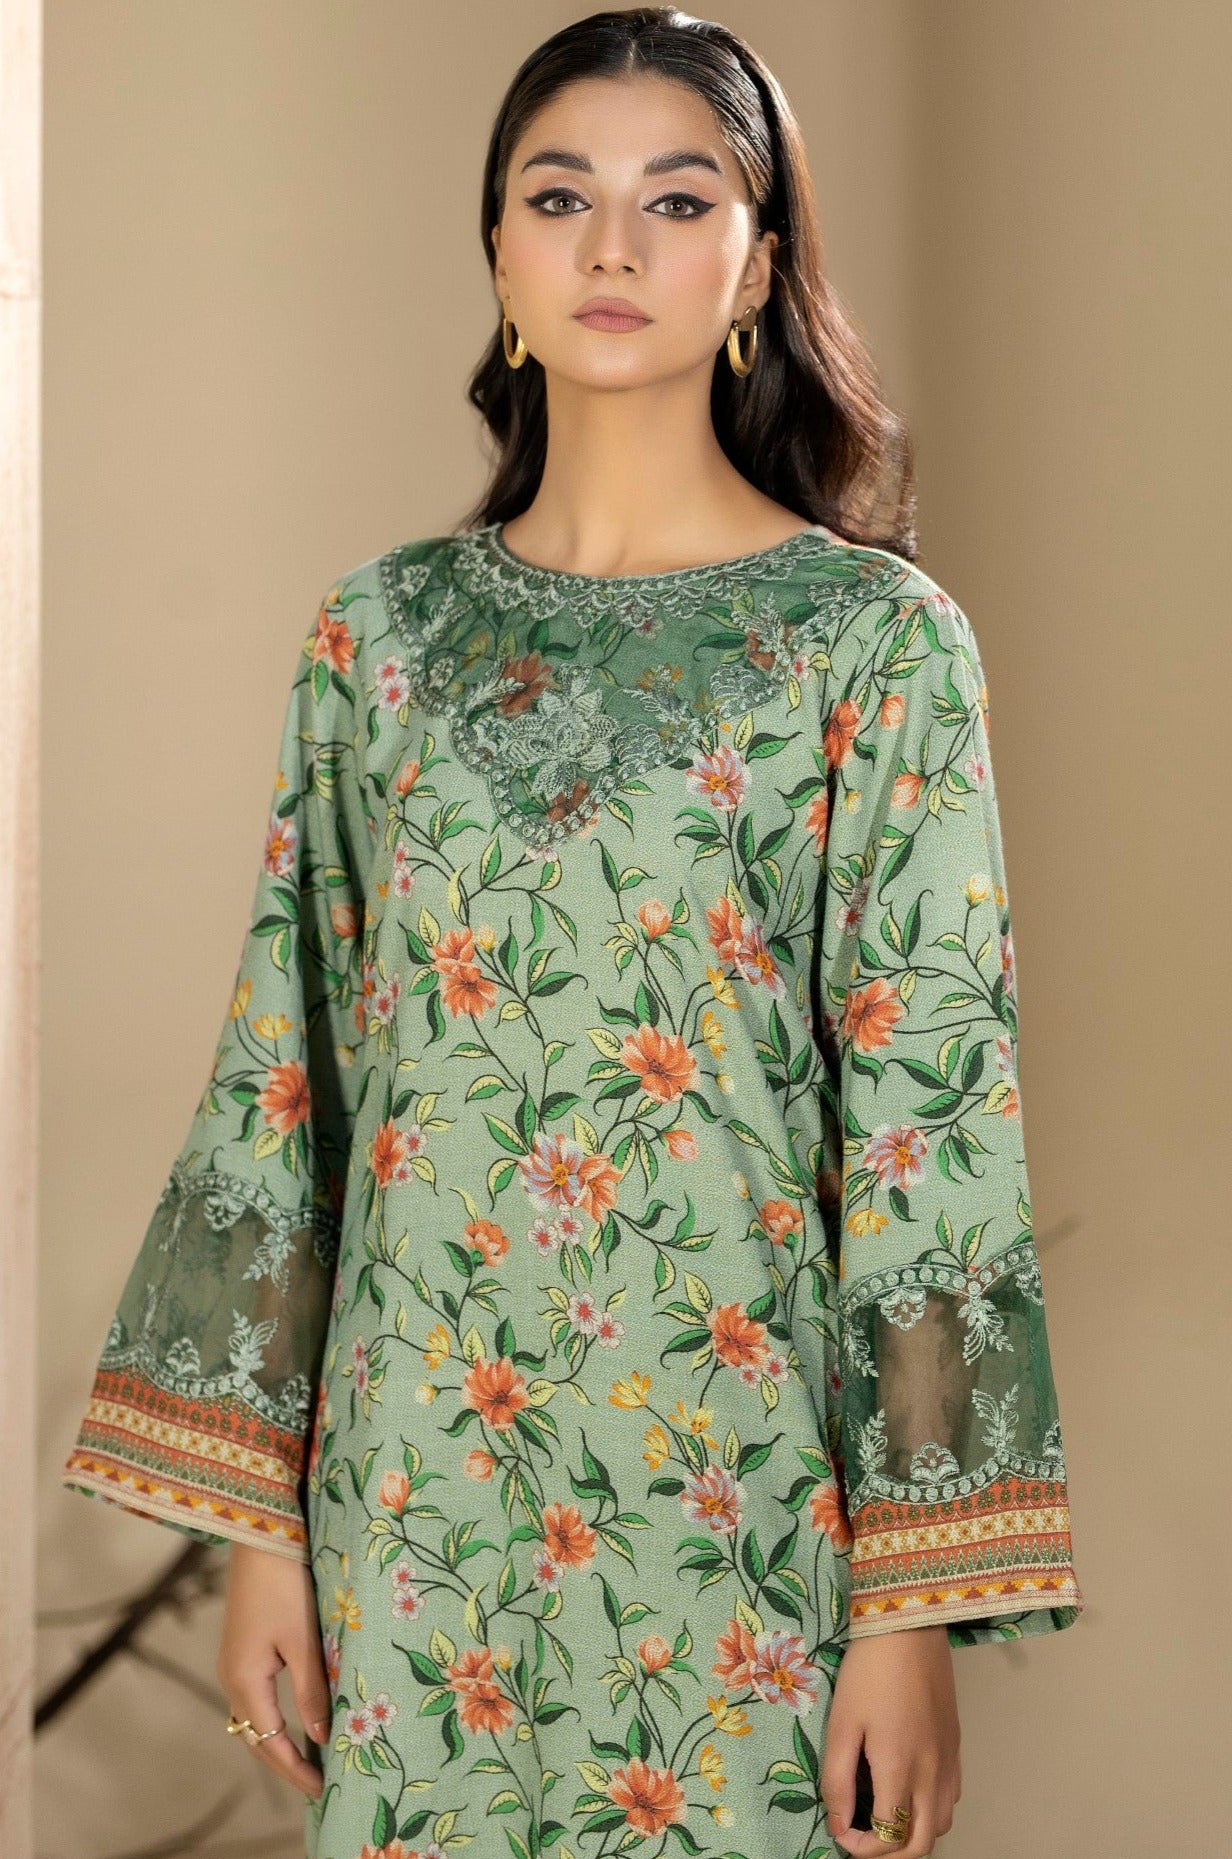 Buy Winter Dresses for Women Online in Pakistan – Mohagni